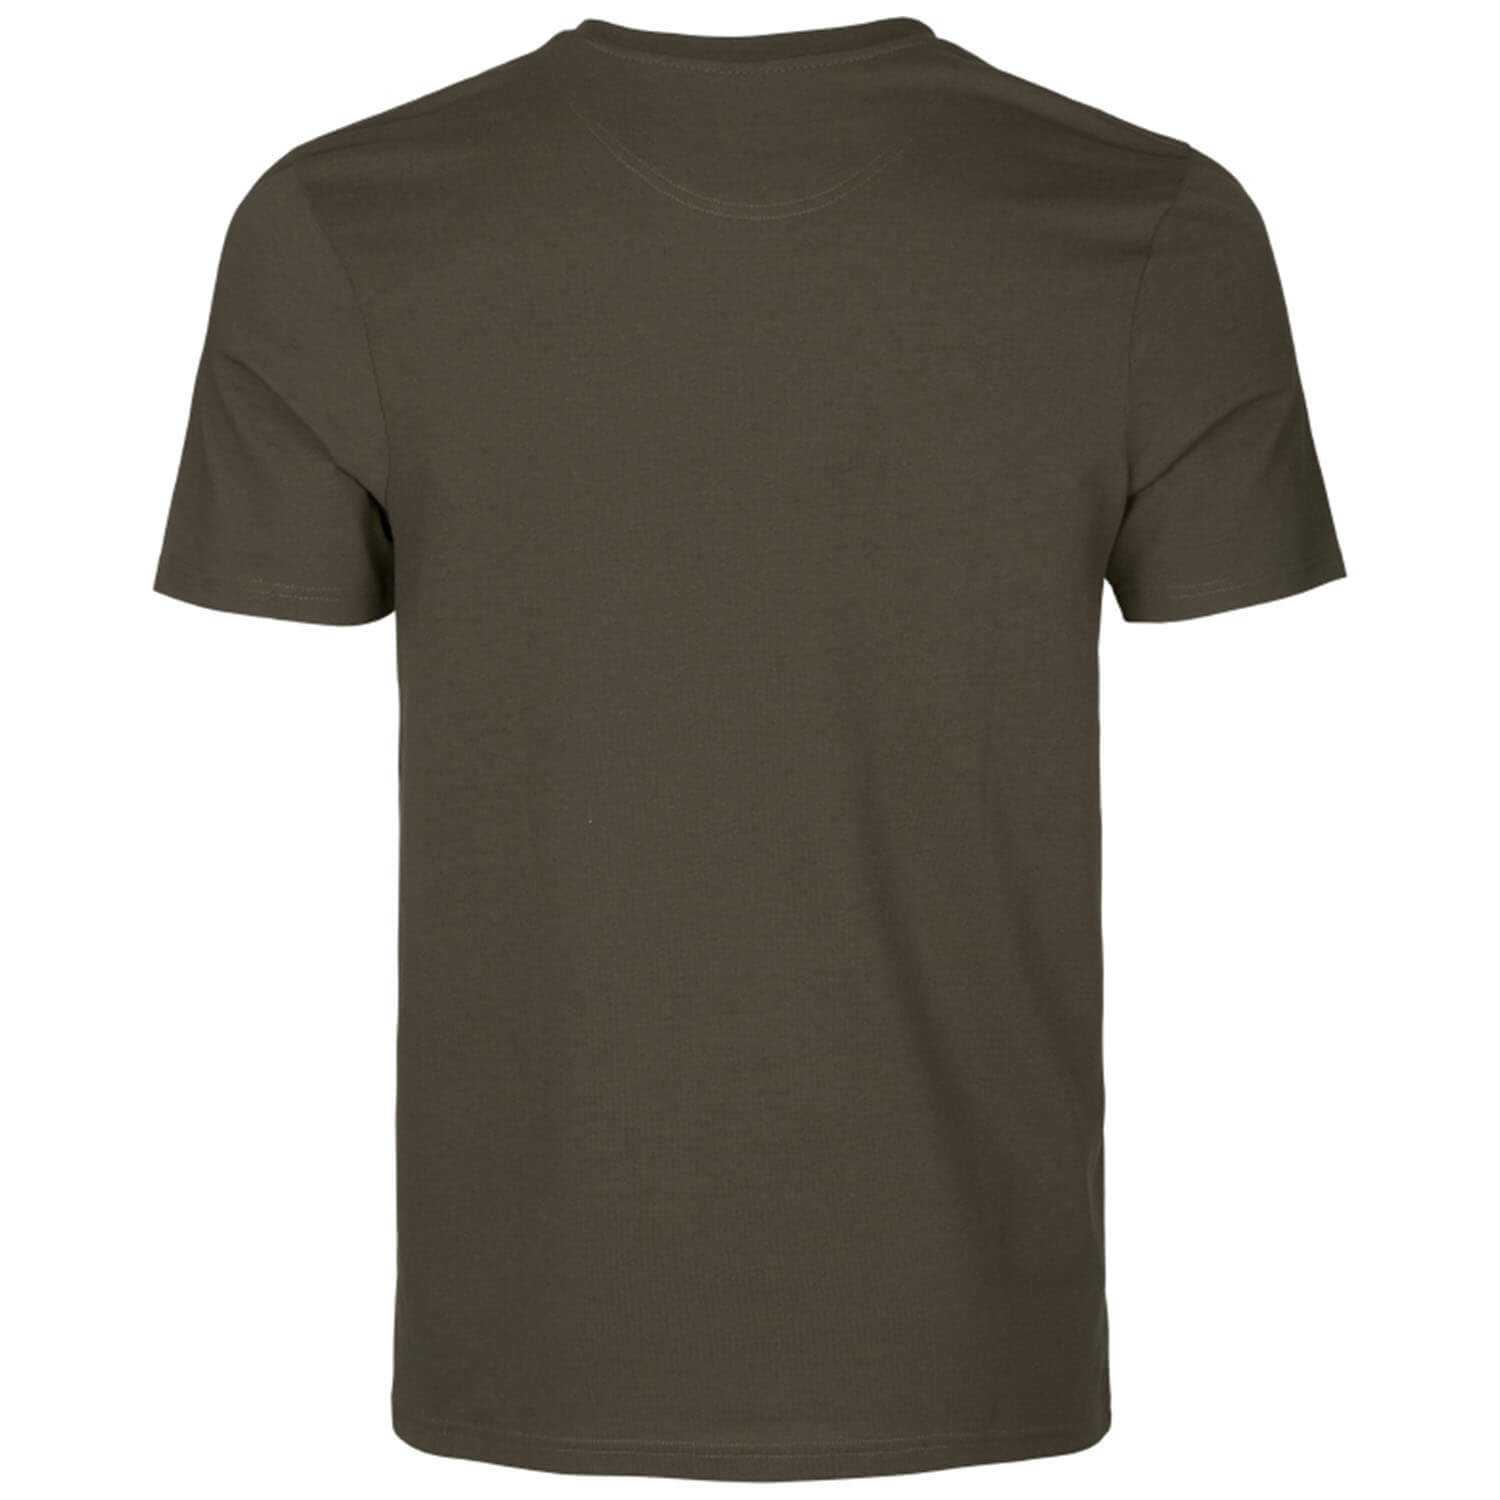 Seeland T-Shirt Kestrel (Grizzly Brown)